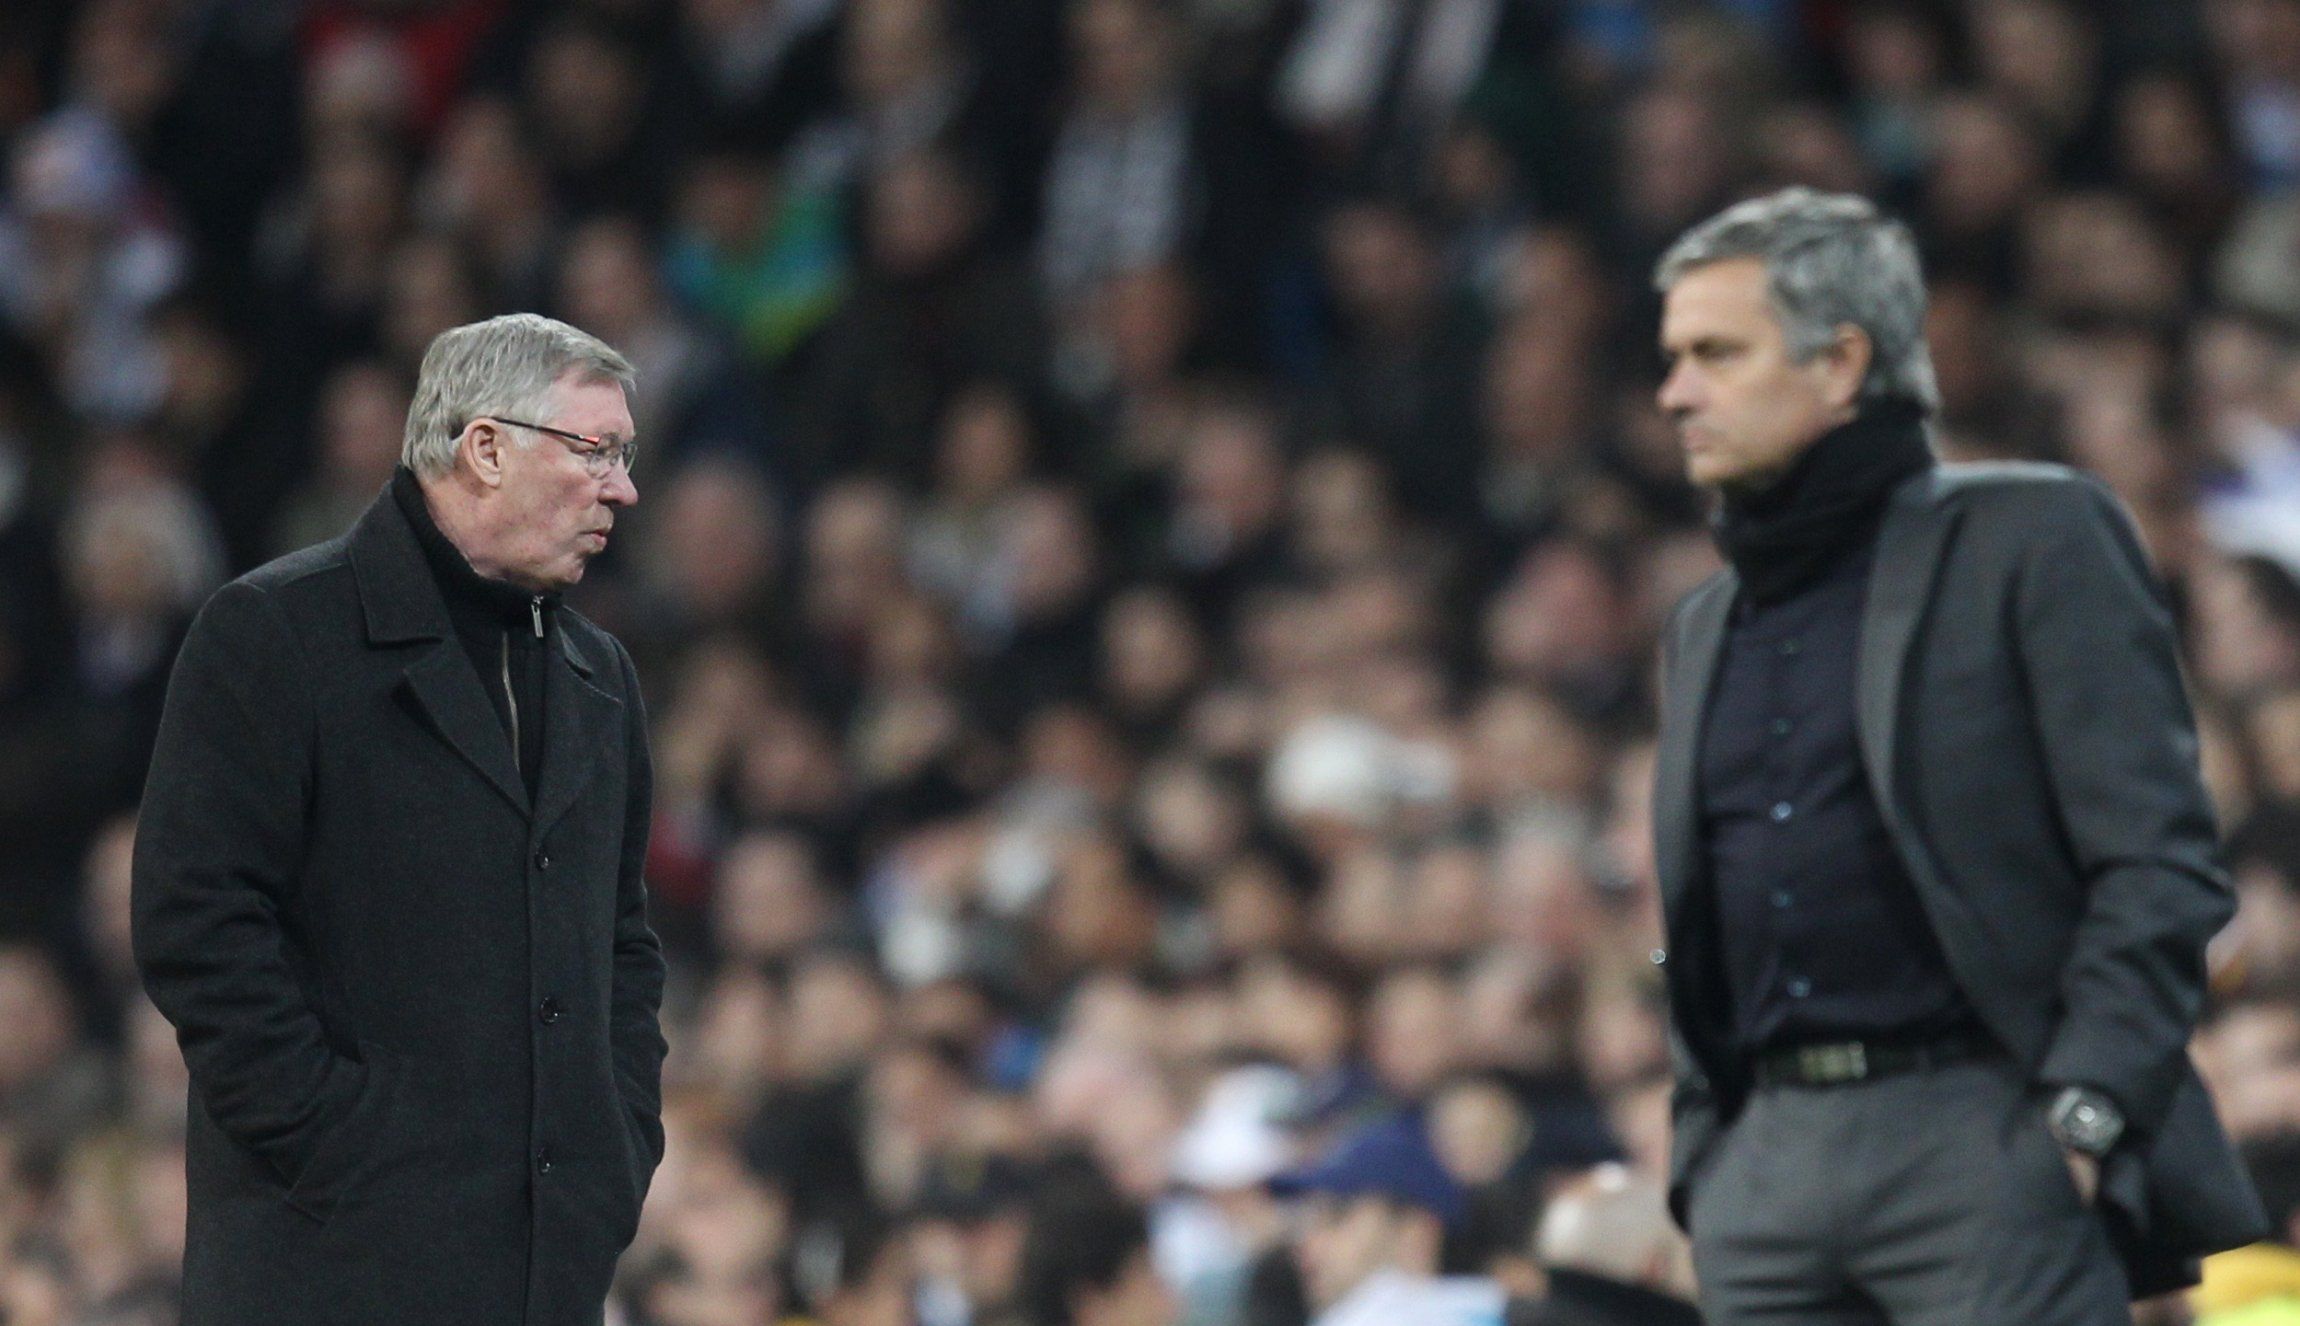 Jose Mourinho and Sir Alex Ferguson look beyond each other